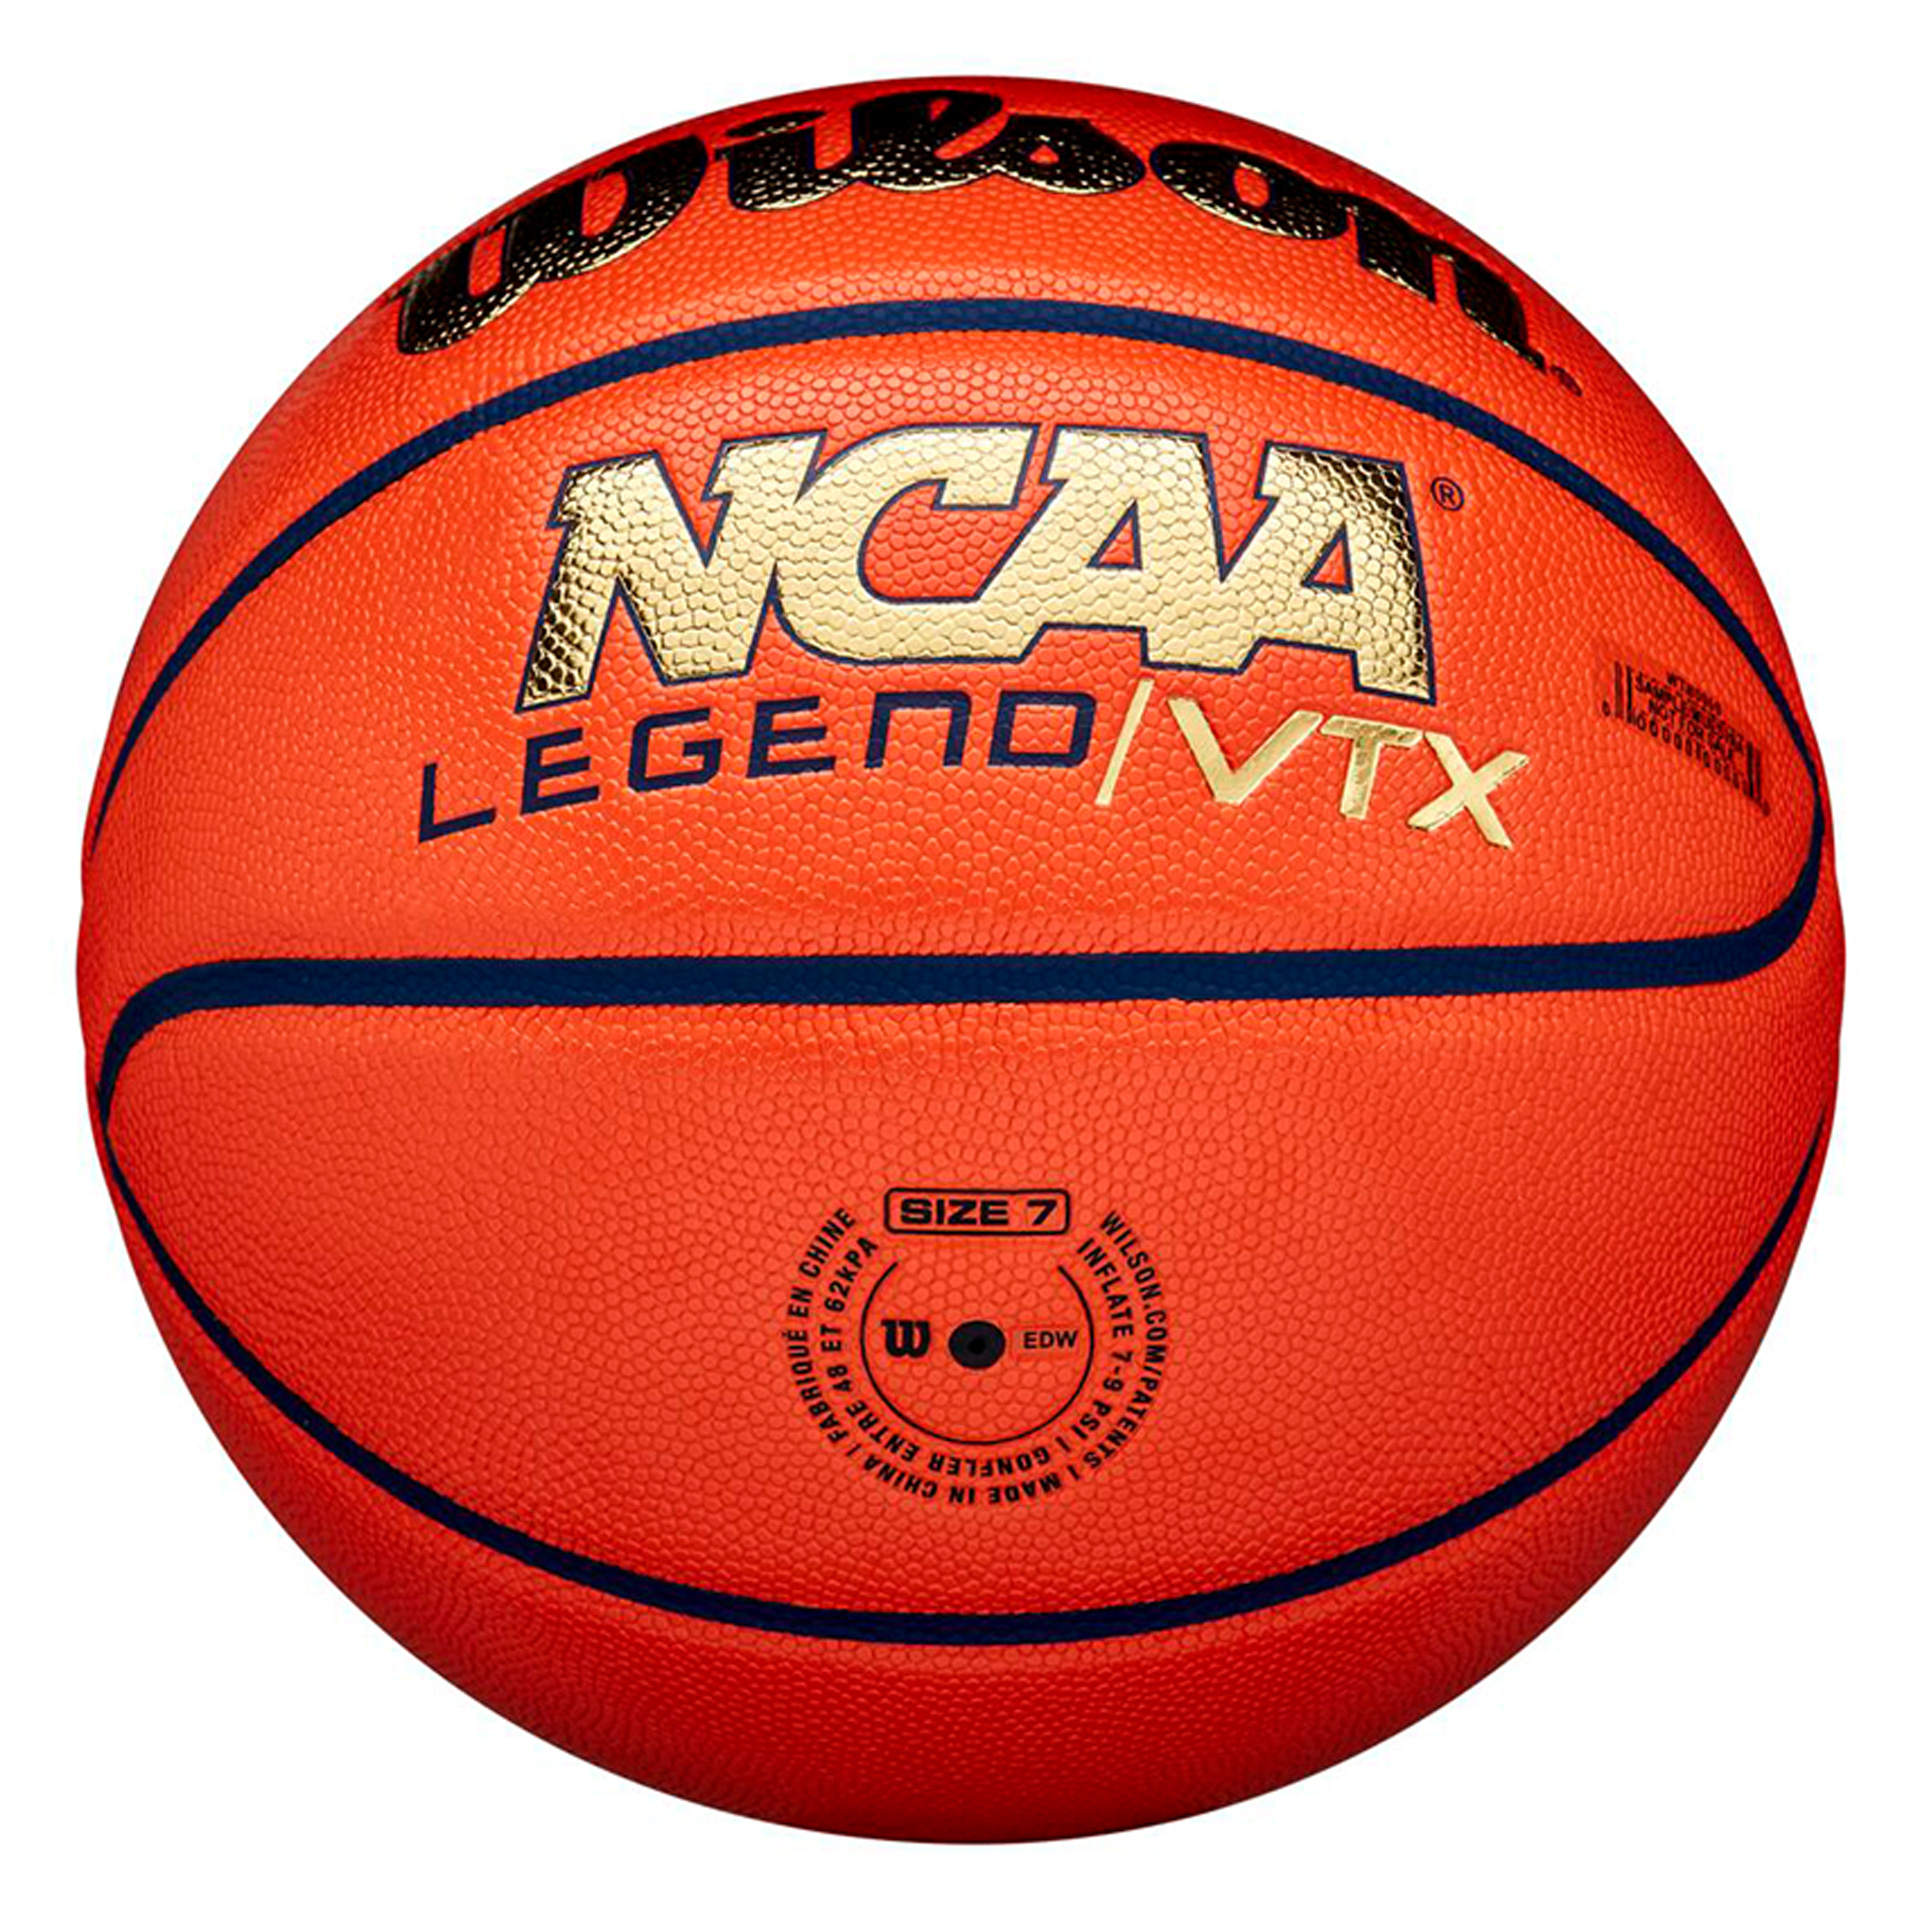 balón baloncesto wilson ncaa legend vtx bskt orange/gold talla 7 3